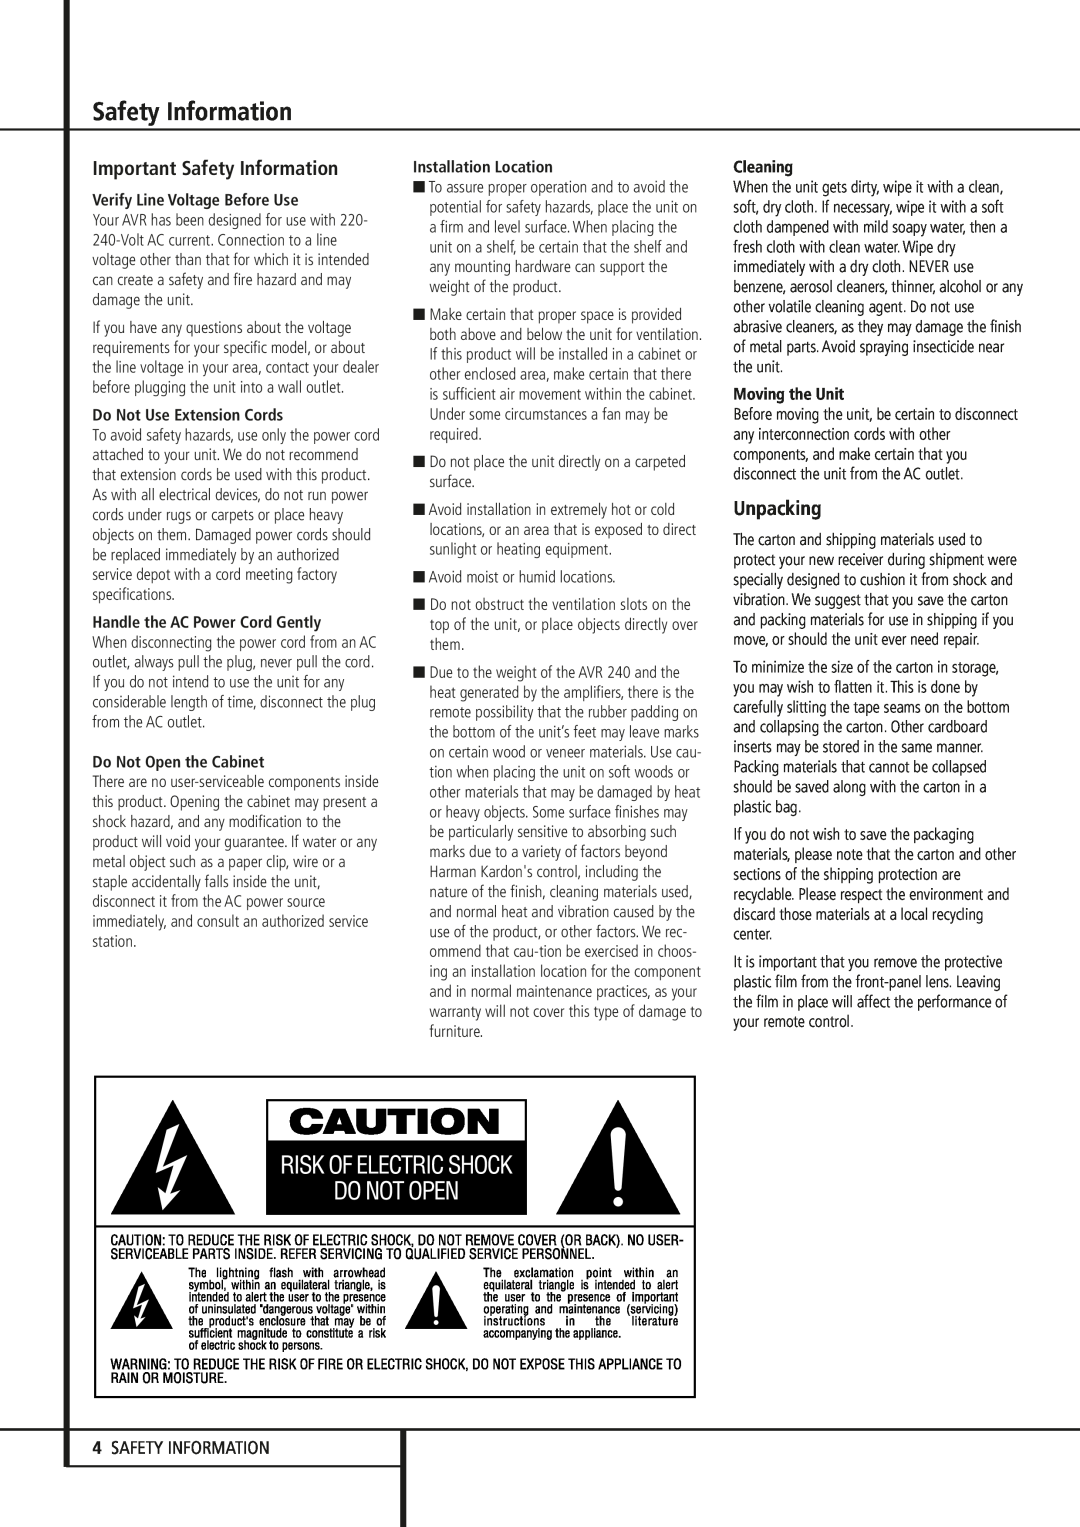 Harman-Kardon AVR 240 Important Safety Information, Unpacking, 4SAFETY INFORMATION, Verify Line Voltage Before Use 